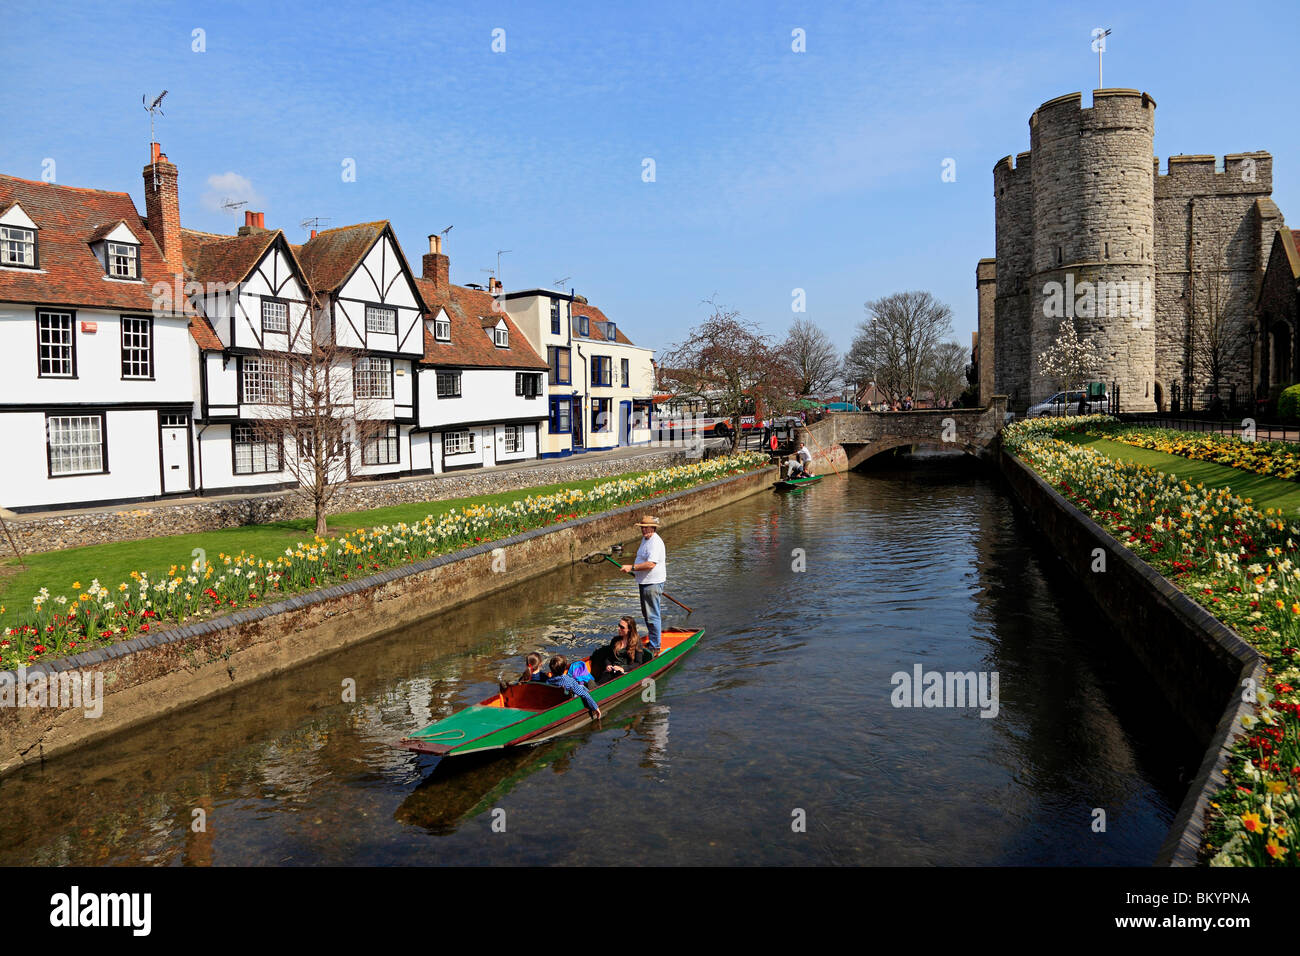 3098. Stechkahn fahren am Fluss Stour, Canterbury, Kent, UK Stockfoto